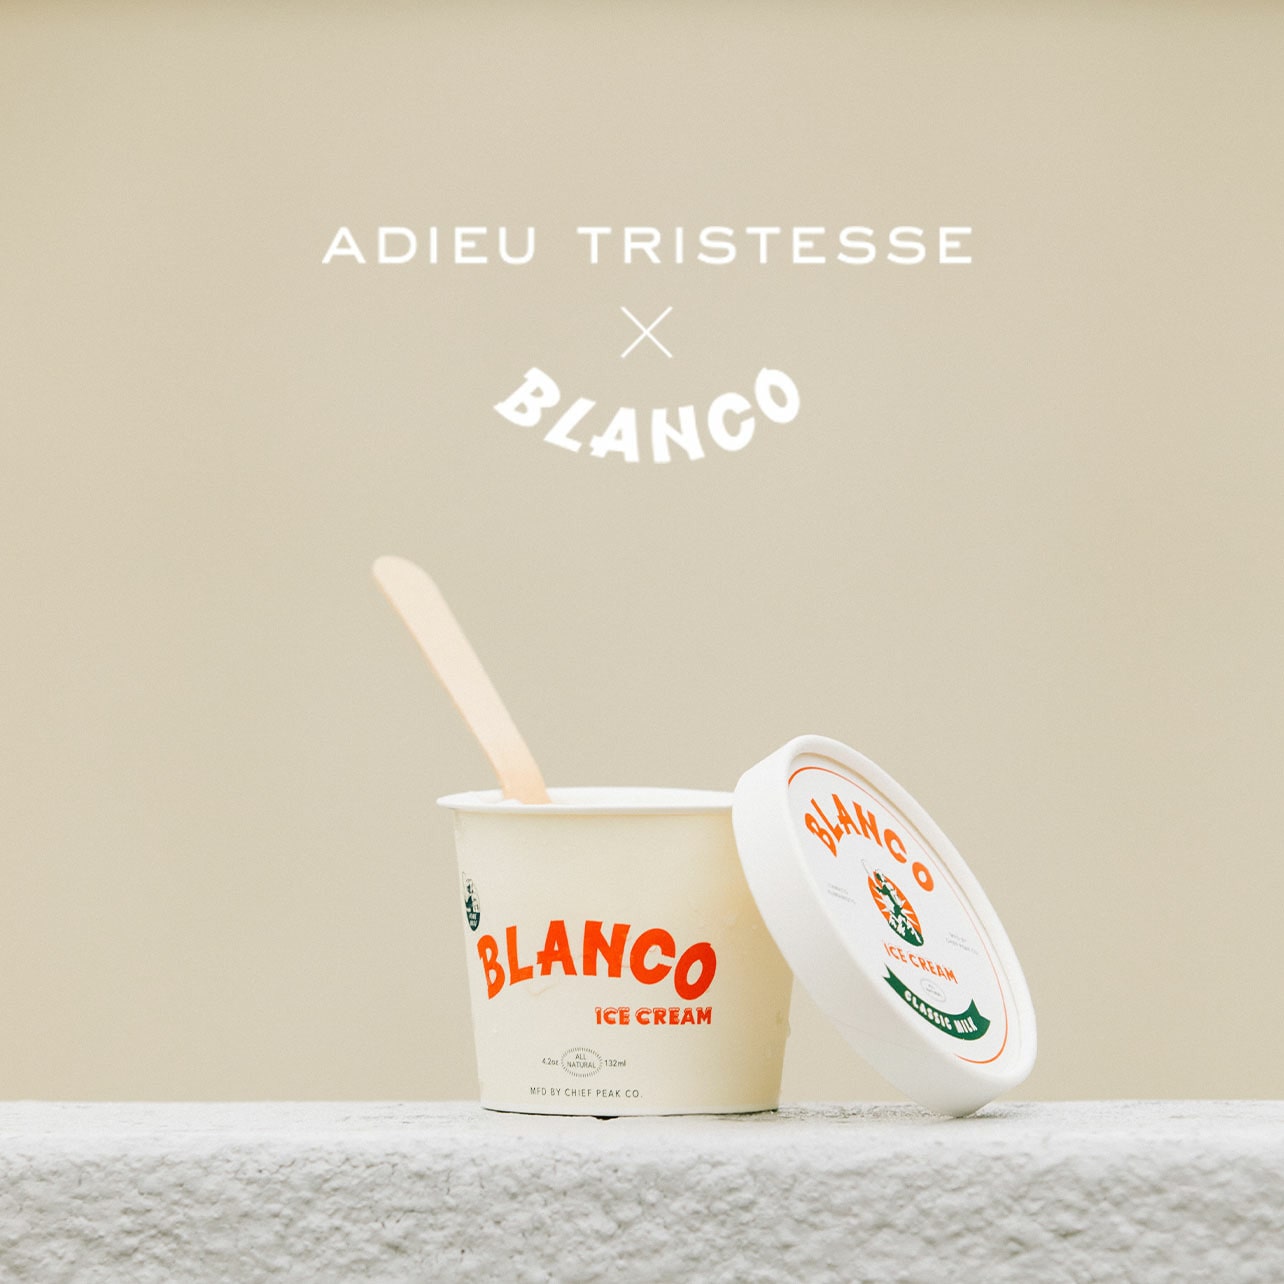 ADIEU TRISTESSE×BLANCO アイスクリーム